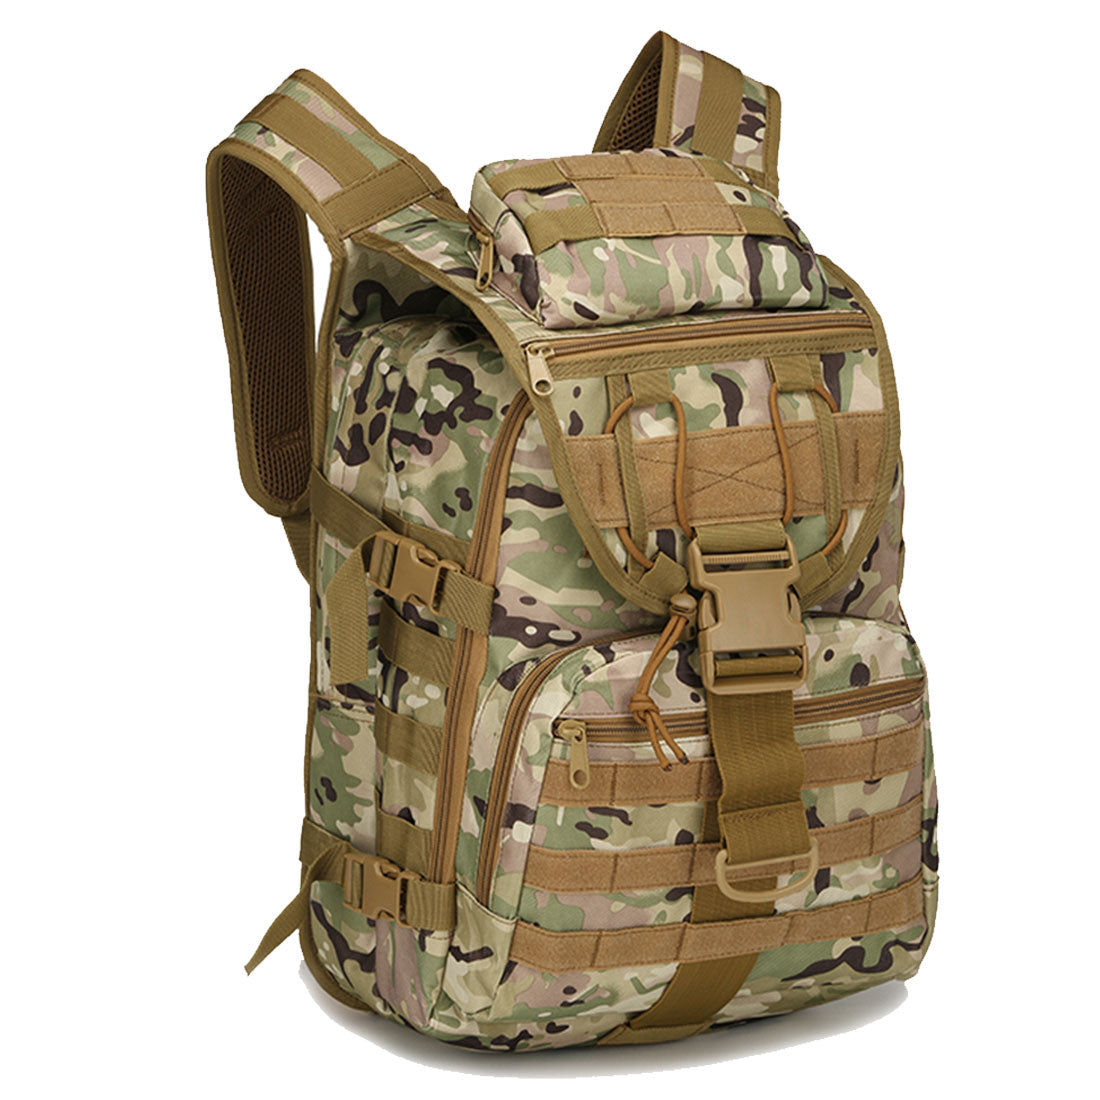 LANBAOSI Tactical Military Molle Backpack Survival Bag Assault Pack LANBAOSI